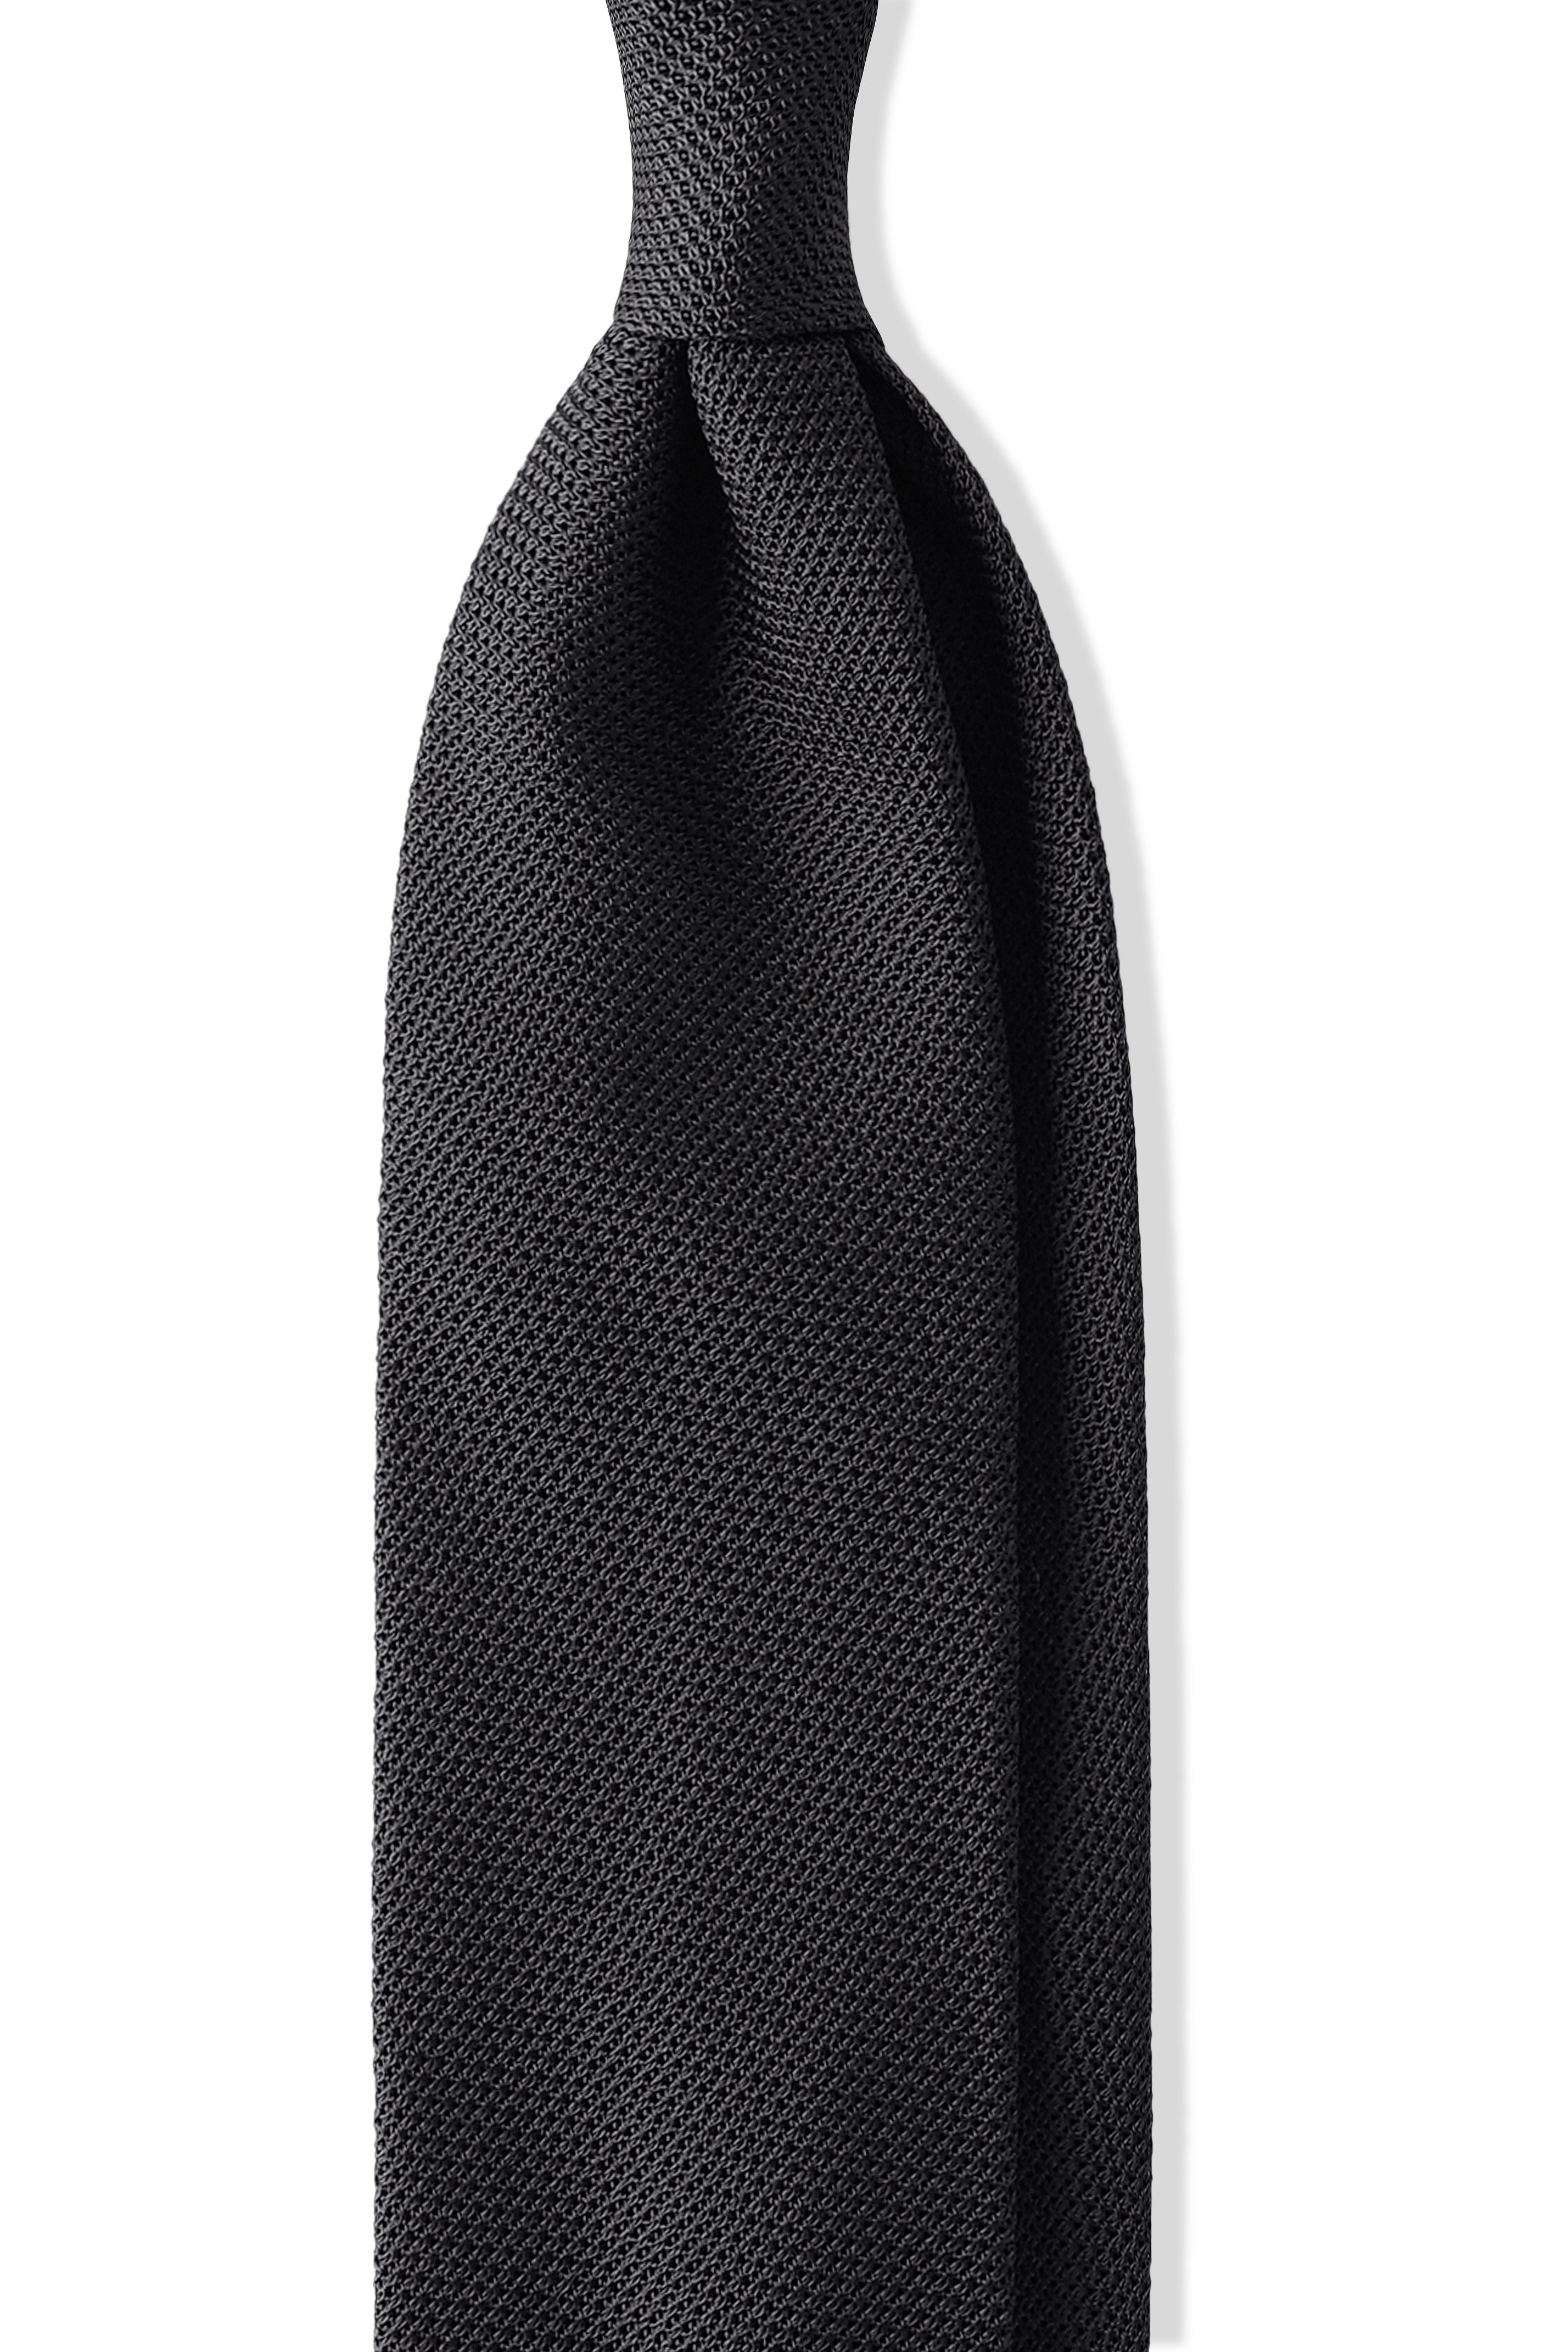 Forzieri Solid Black Pure Silk Tie at FORZIERI Canada